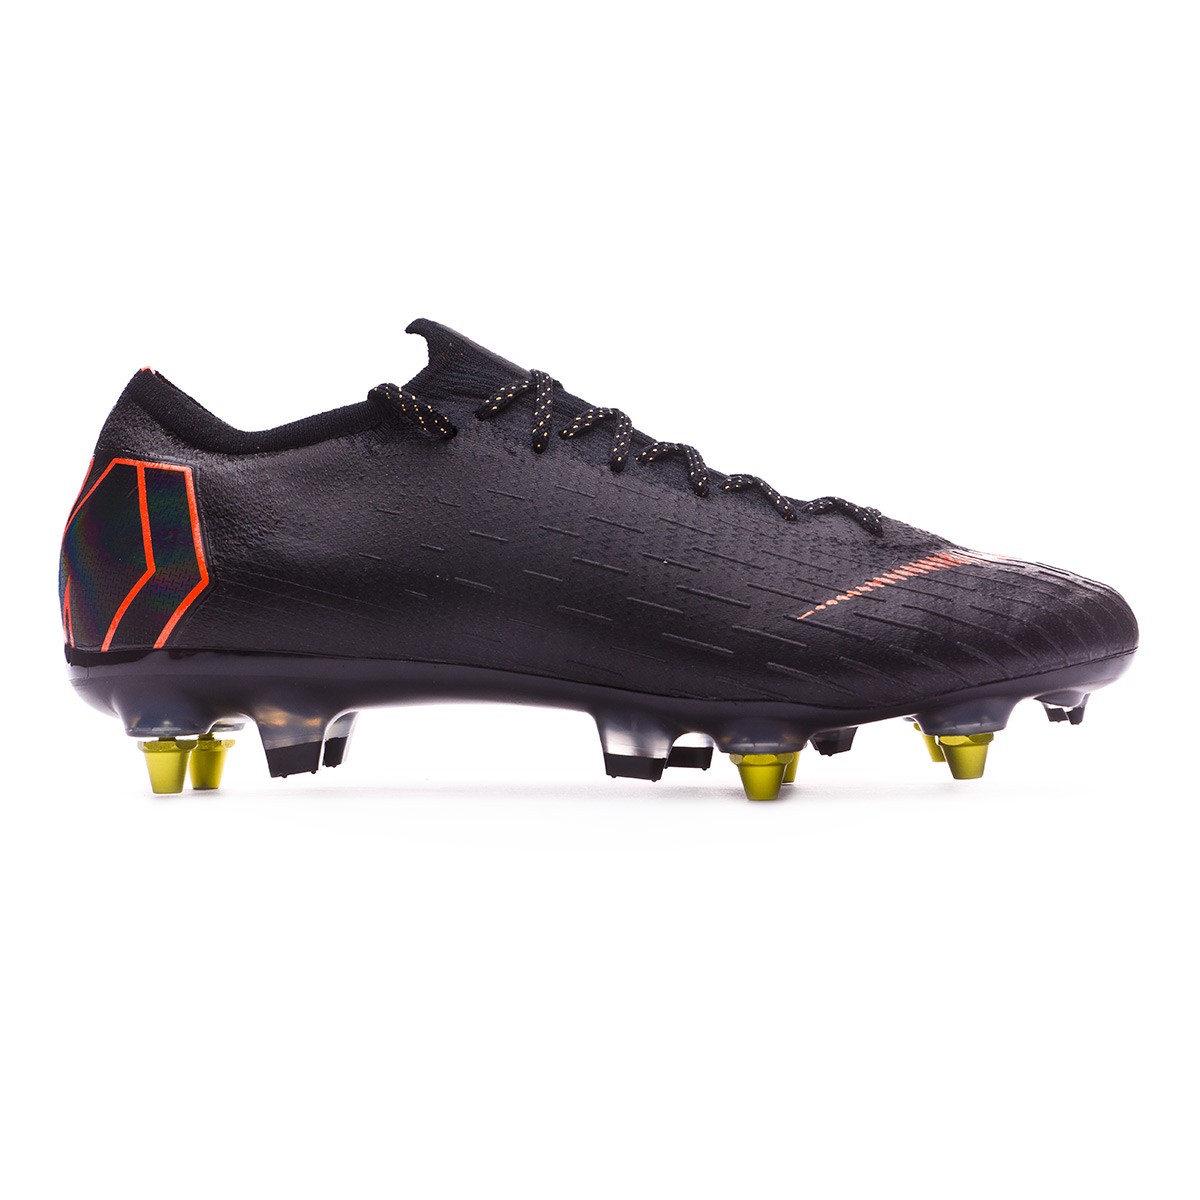 NIKE Vapor 13 Pro TF Unisex Adult football boots Amazon.